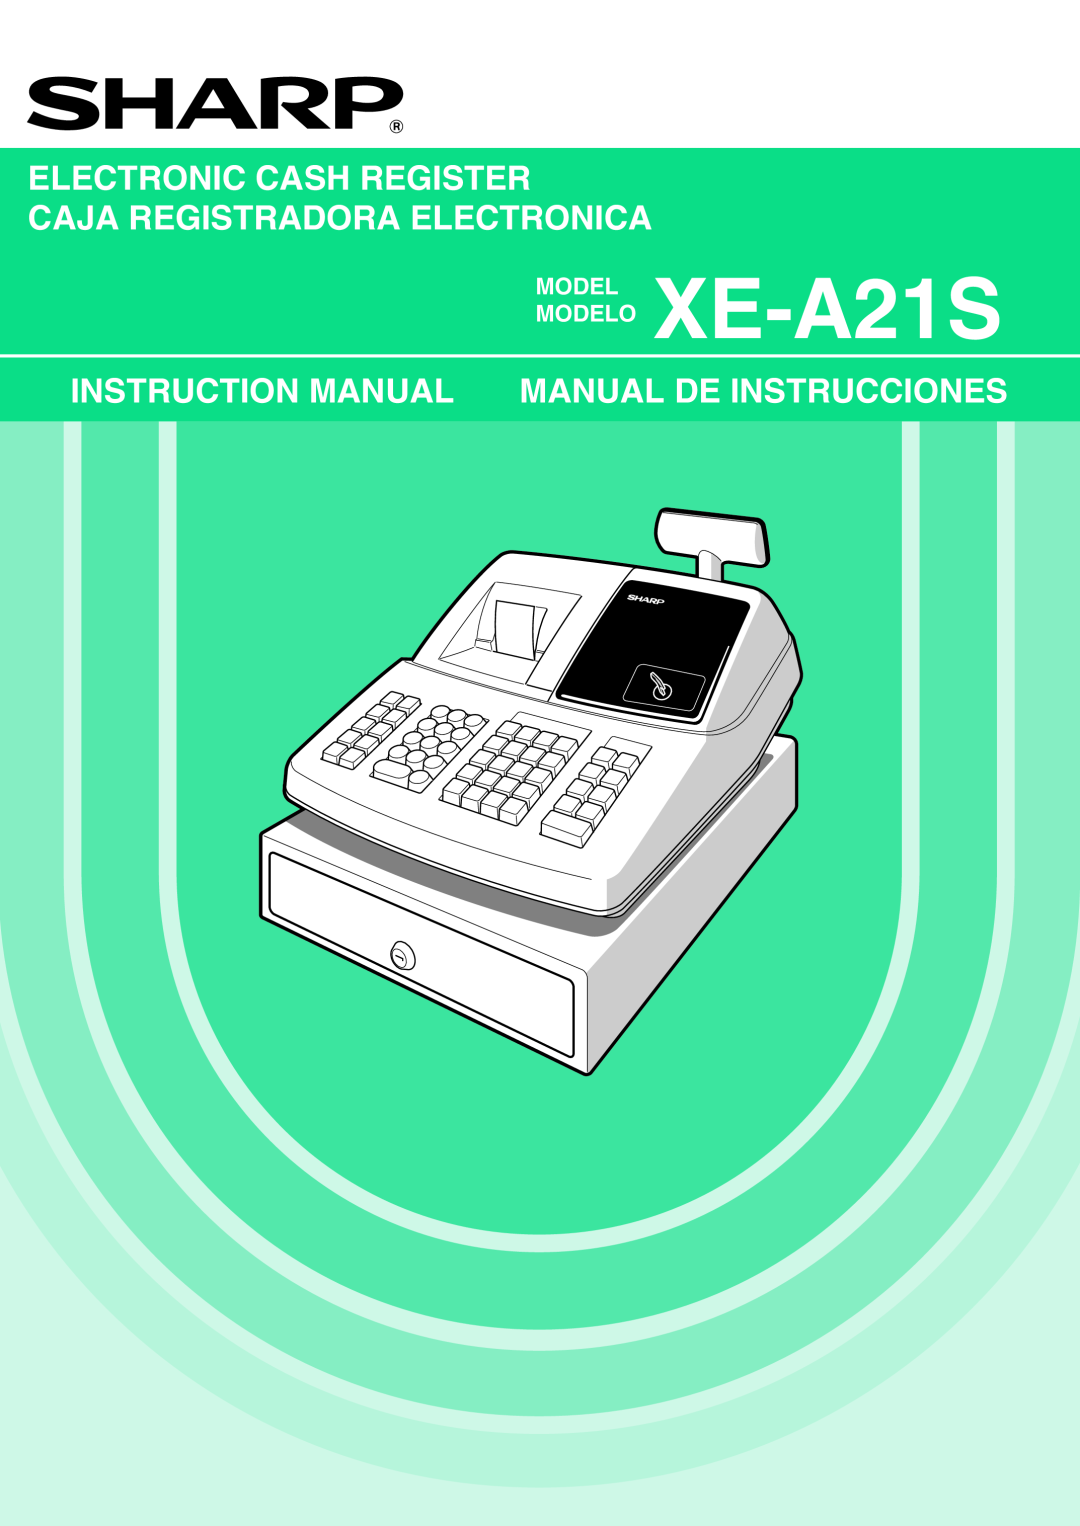 Sharp instruction manual Electronic Cash Register Caja Registradora Electronica, MODEL MODELO XE-A21S 